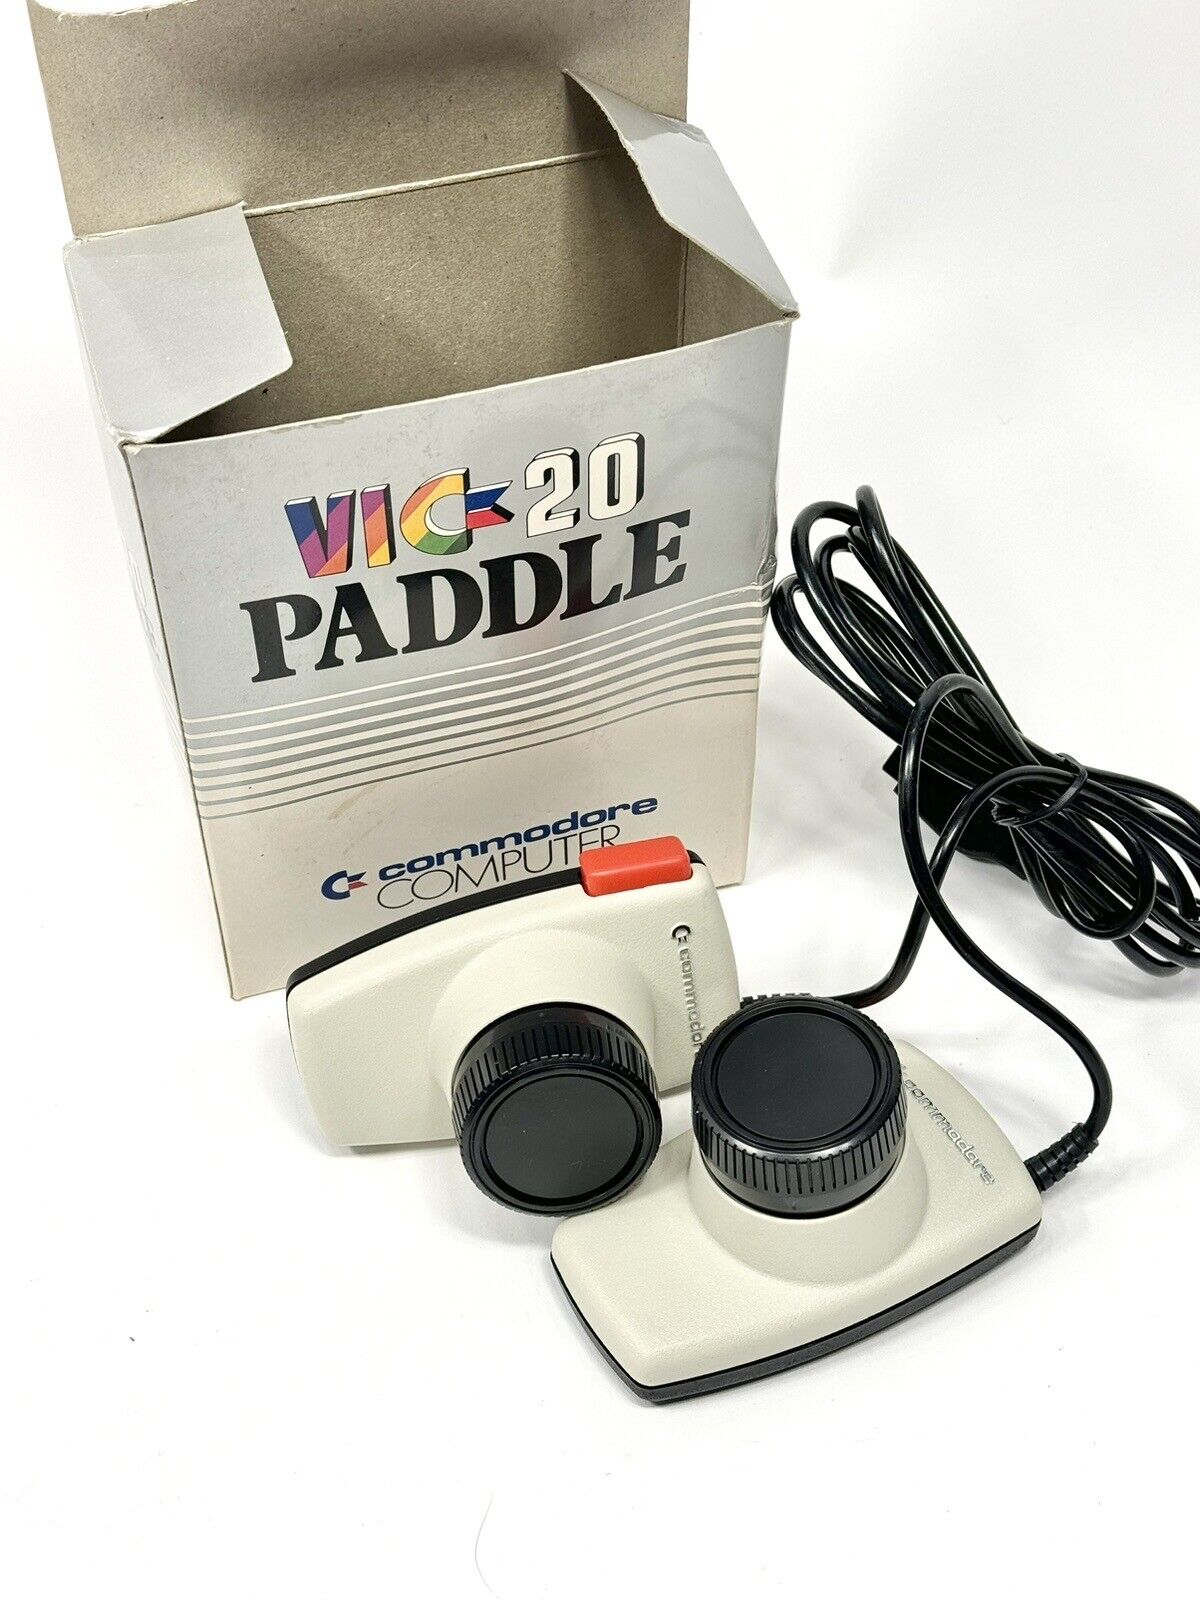 Rare Original VIC 20 Commodore Paddle Controllers, NOS